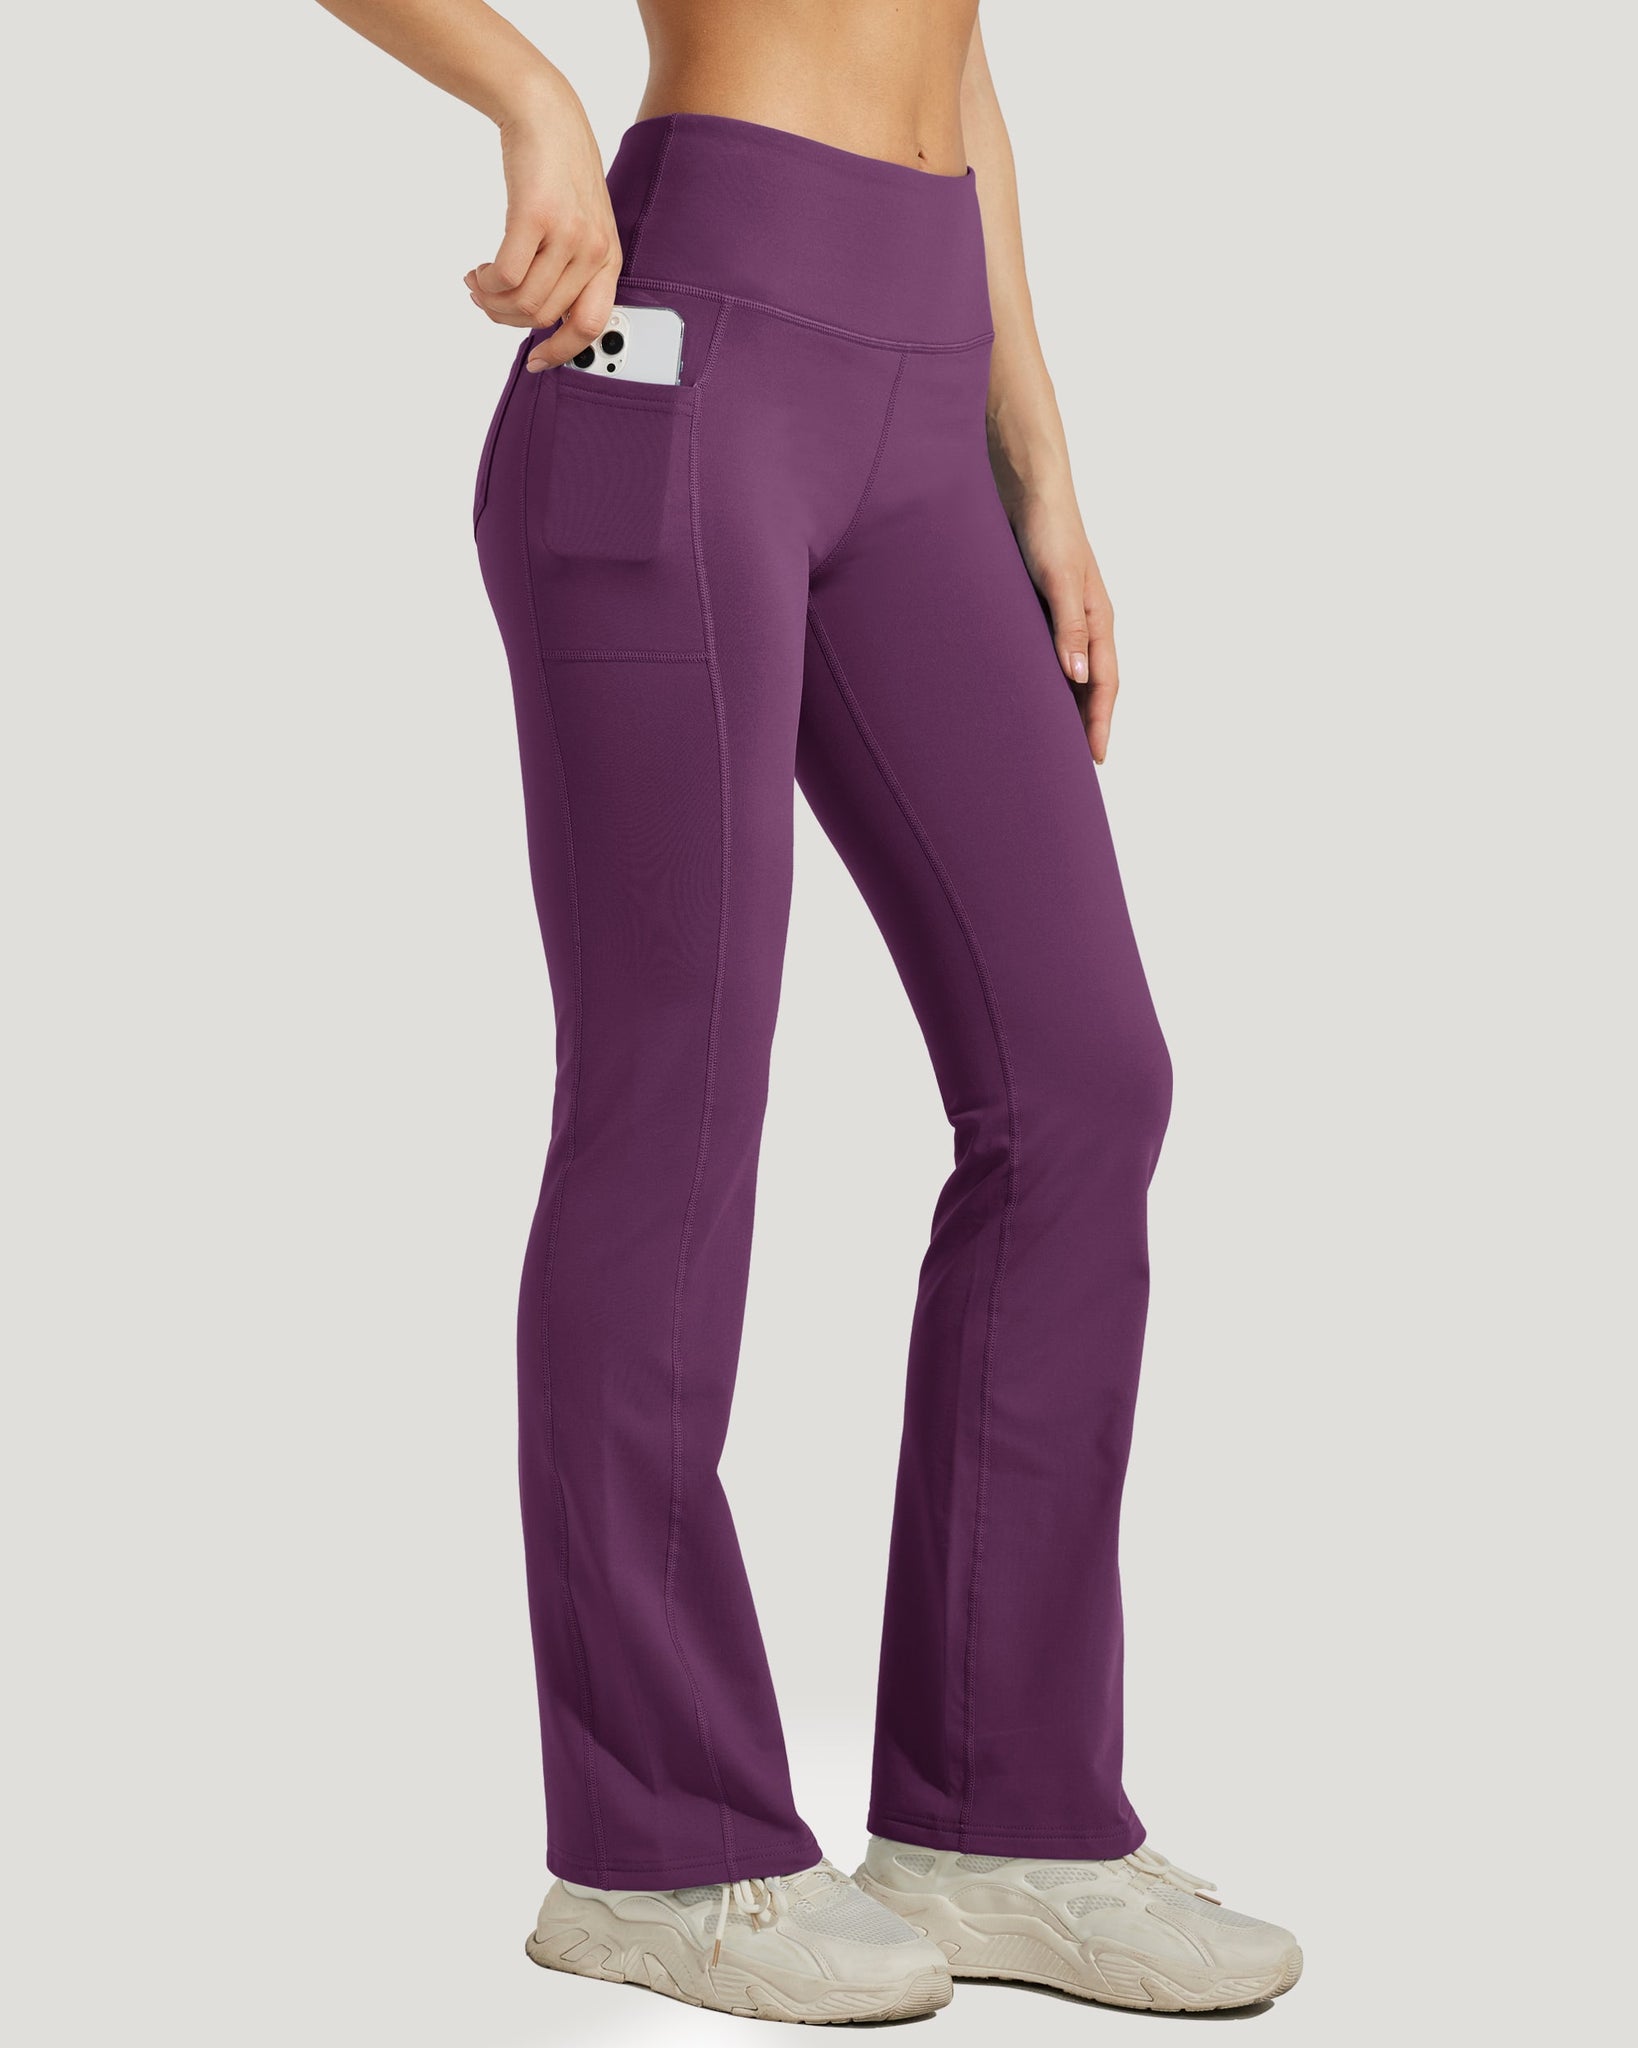 Women's Fleece Lined Bootcut Yoga Pants_Purple_model4